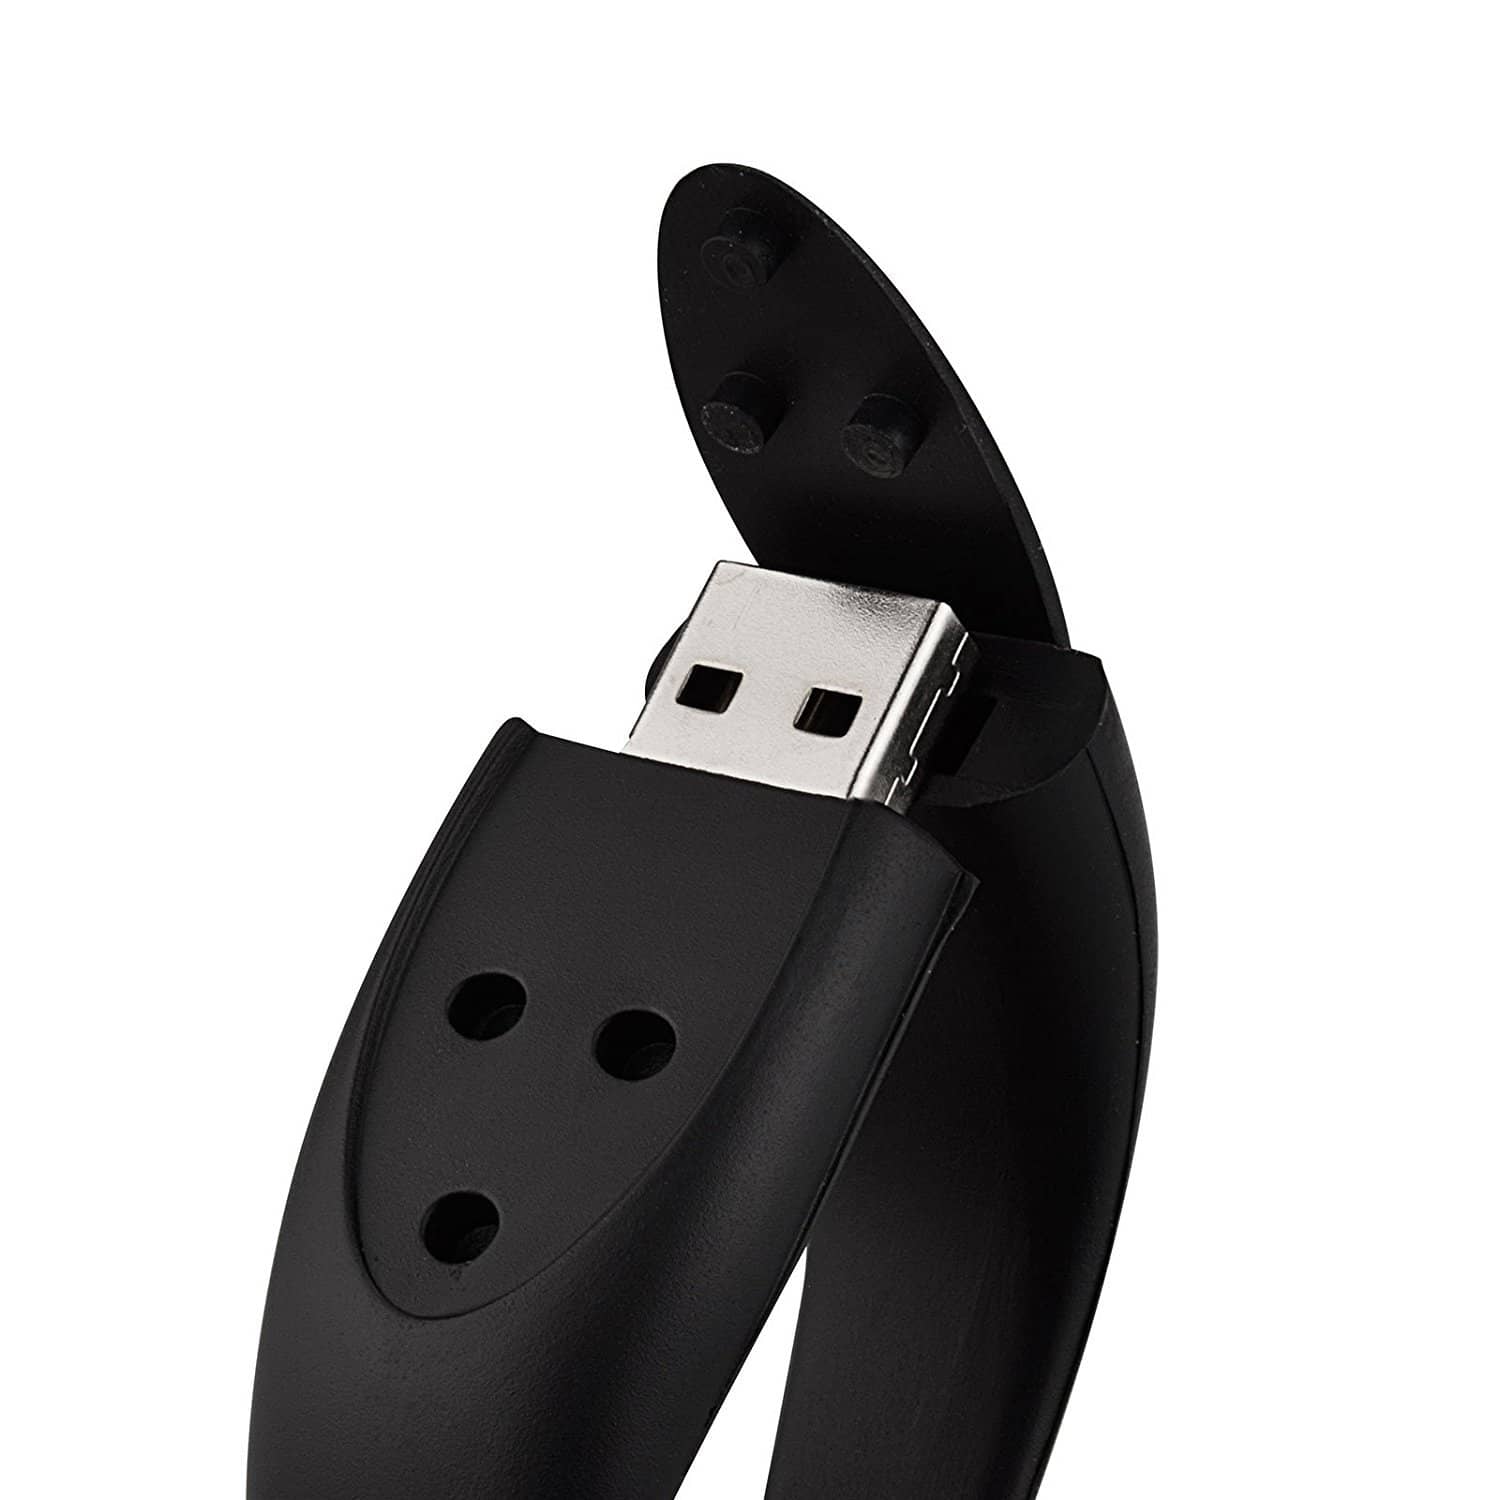 KOOTION 16GB Wristband USB 2.0 Flash Drive - Black